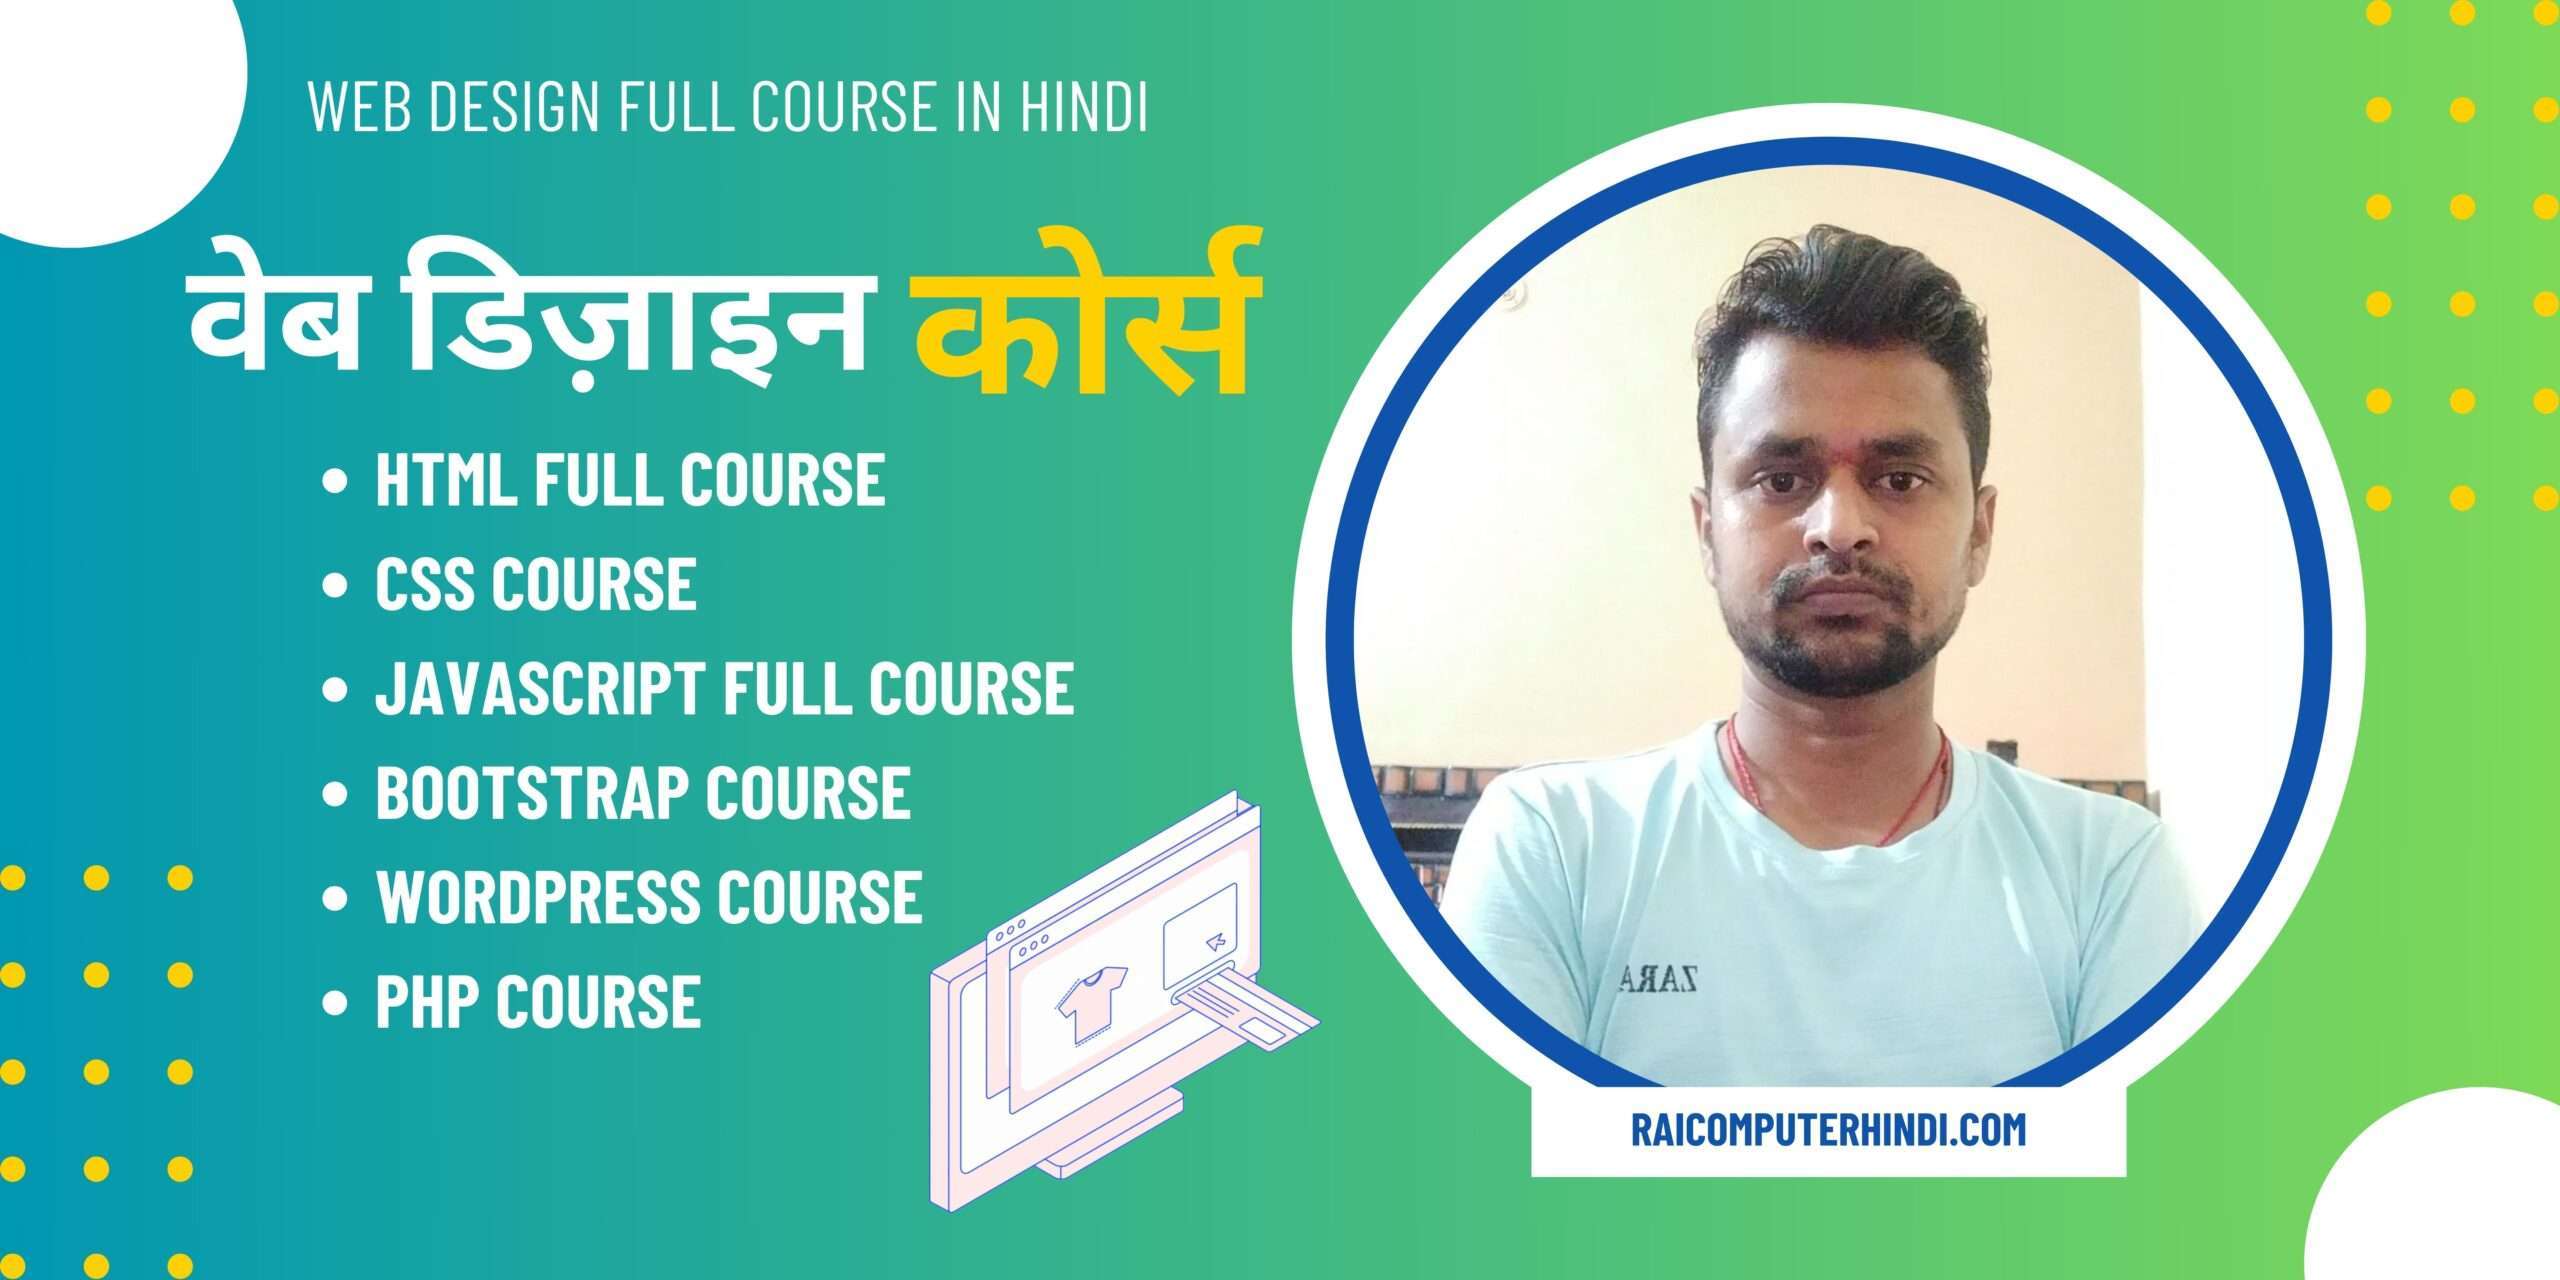 Web Design Full Course In Hindi